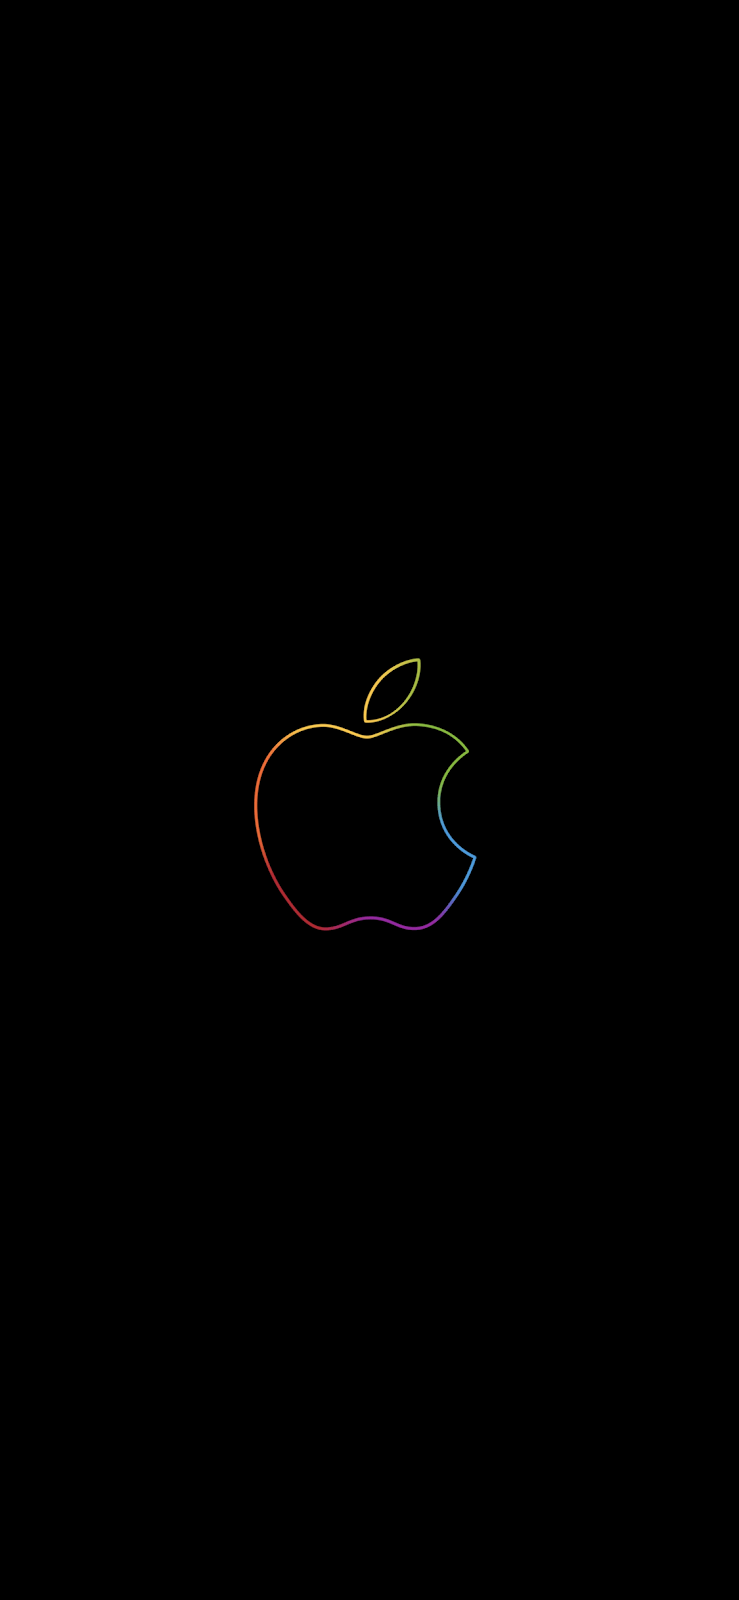 We'll be right back Apple logo Wallpaper [iPhone all version] di 2020. Apple logo, Lukisan galaksi, Gambar